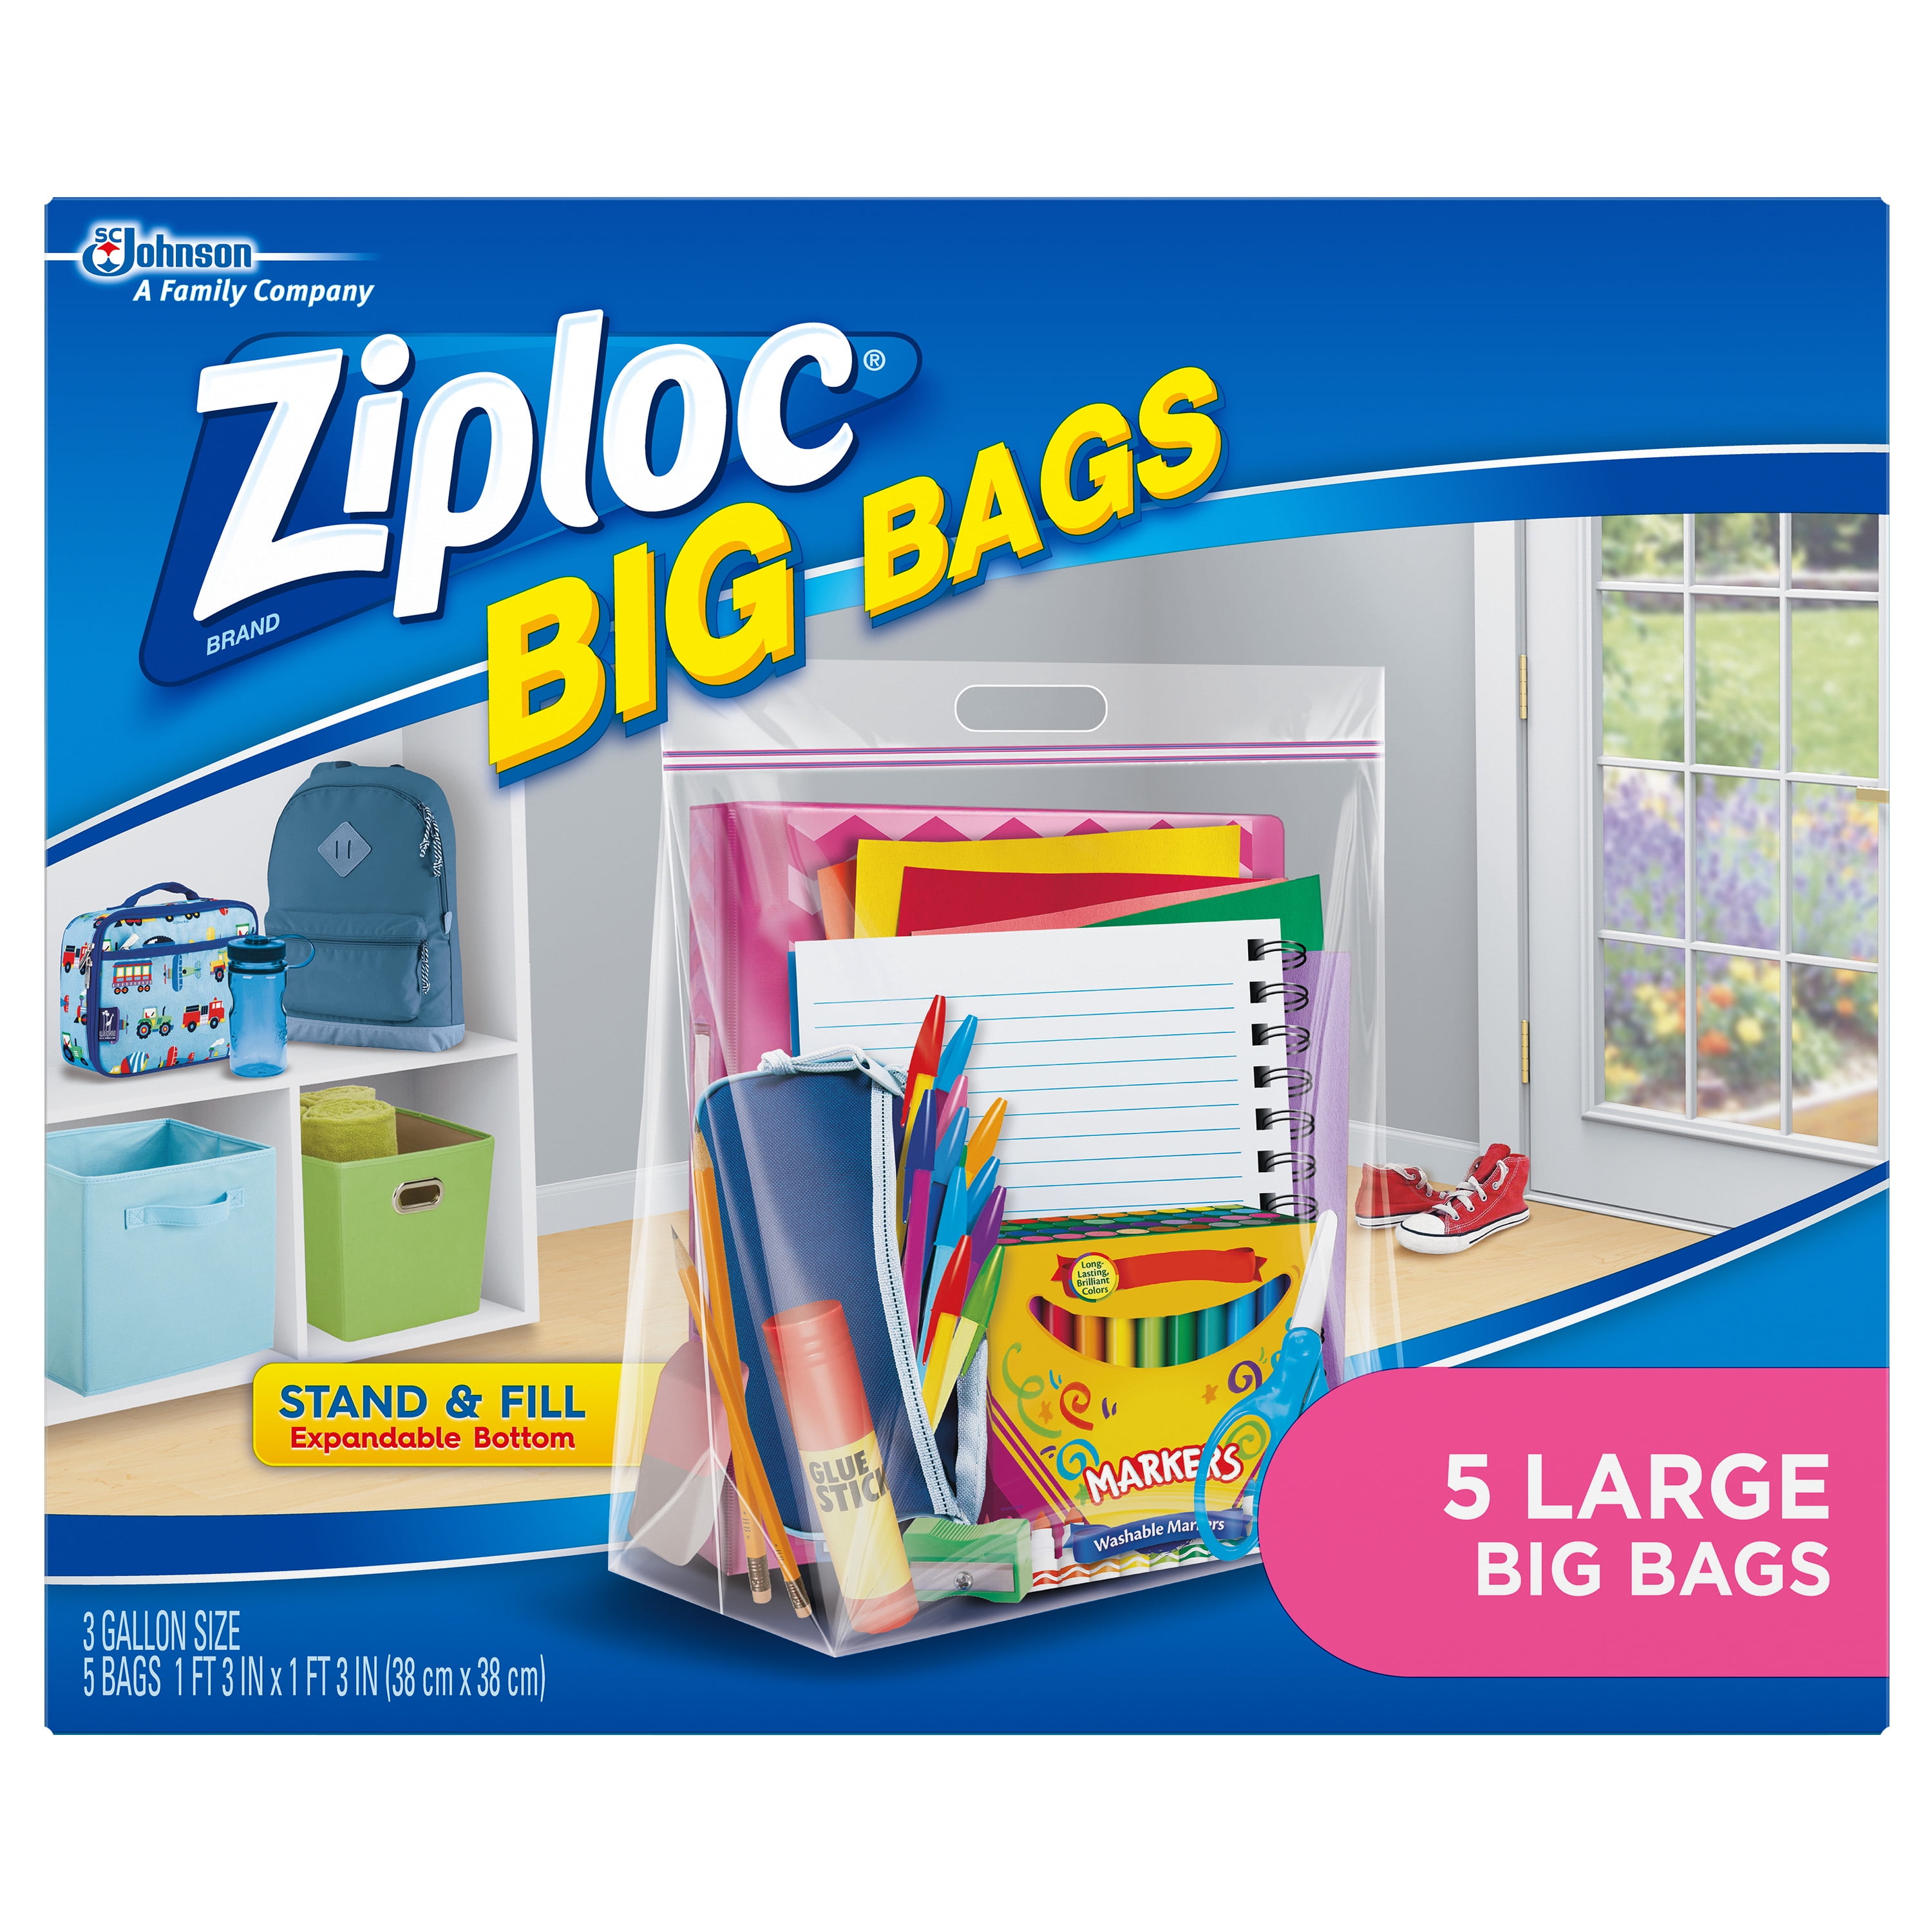 2 ~ New BIG LARGE Plastic STORAGE BAGS w Handle 15 x 15 Zip Loc